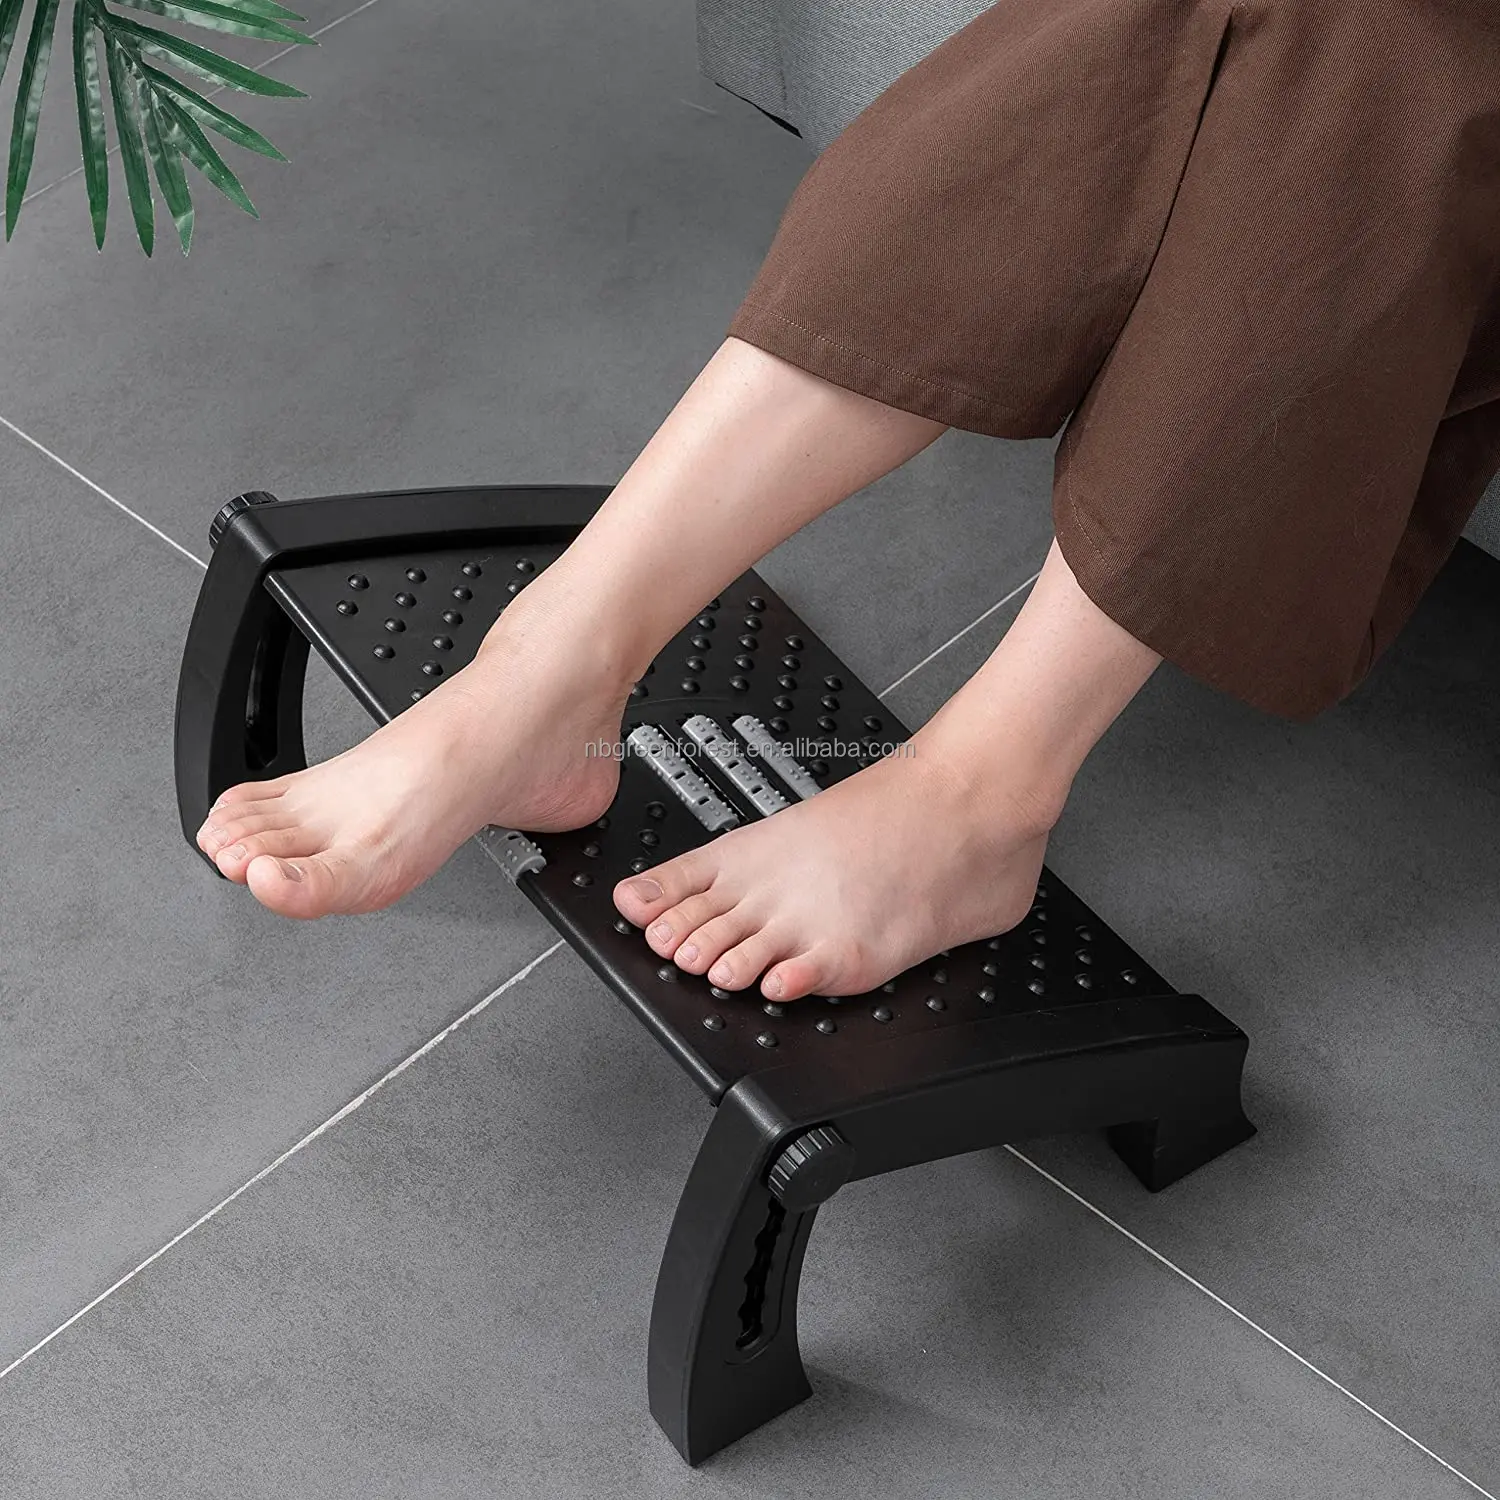 Details about   Footrest Under Desk Adjustable Foot Rest with Massage Texture and Roller 